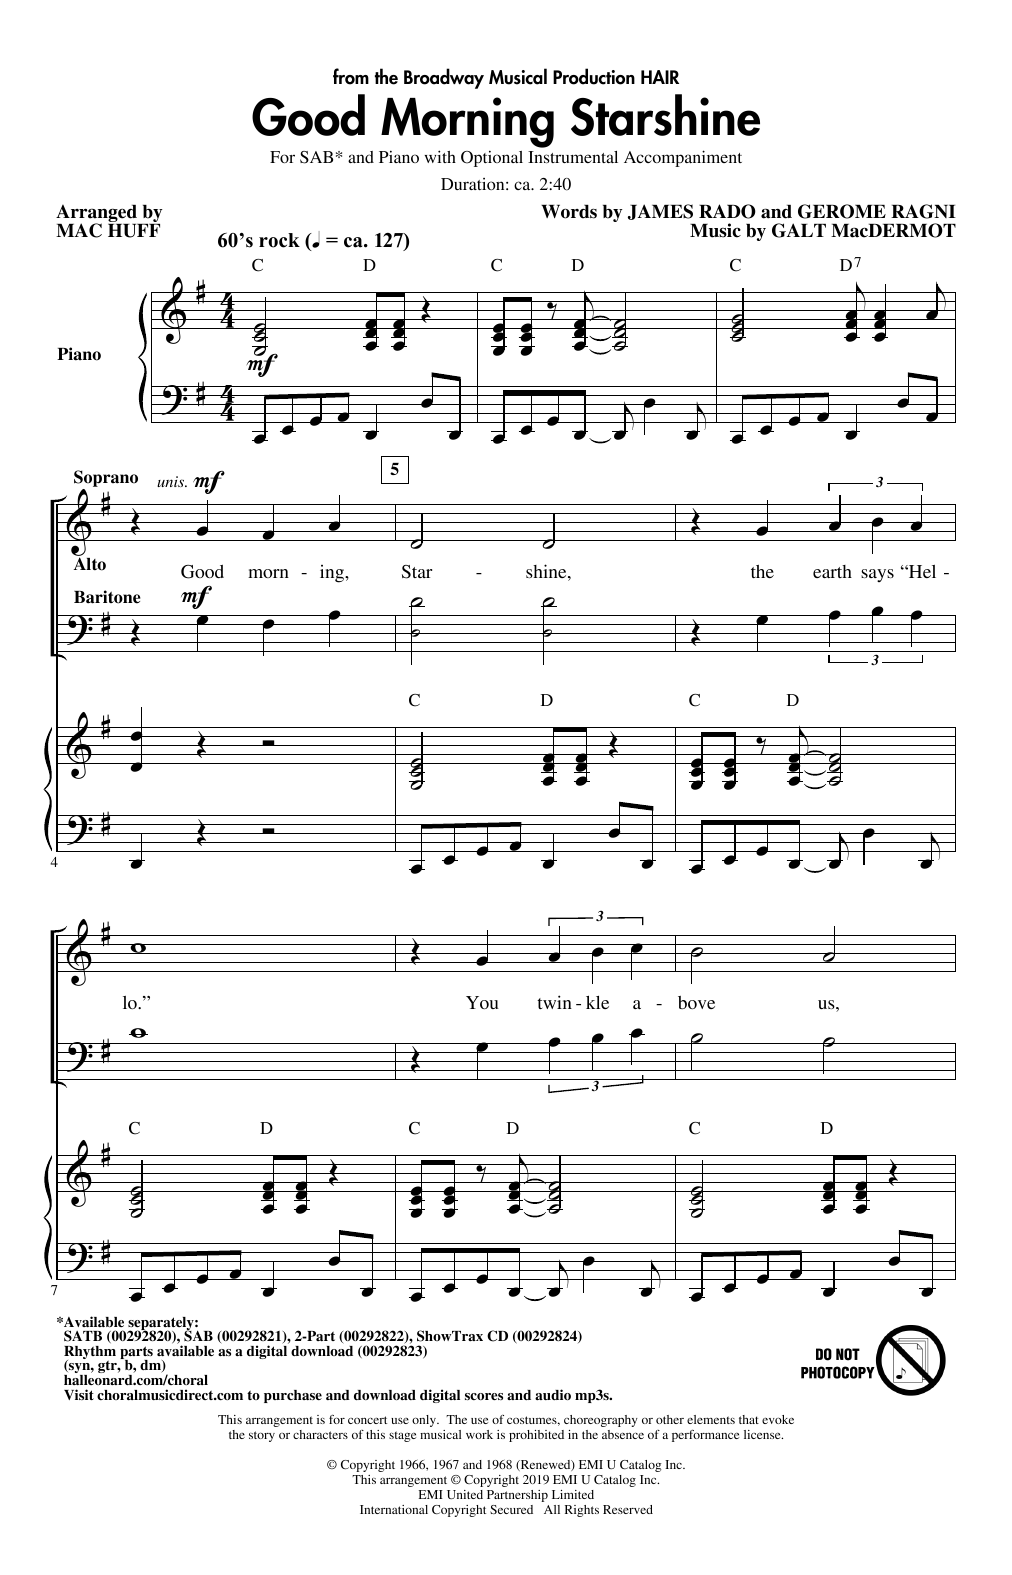 Galt MacDermot Good Morning Starshine (from the musical Hair) (arr. Mac Huff) Sheet Music Notes & Chords for 2-Part Choir - Download or Print PDF